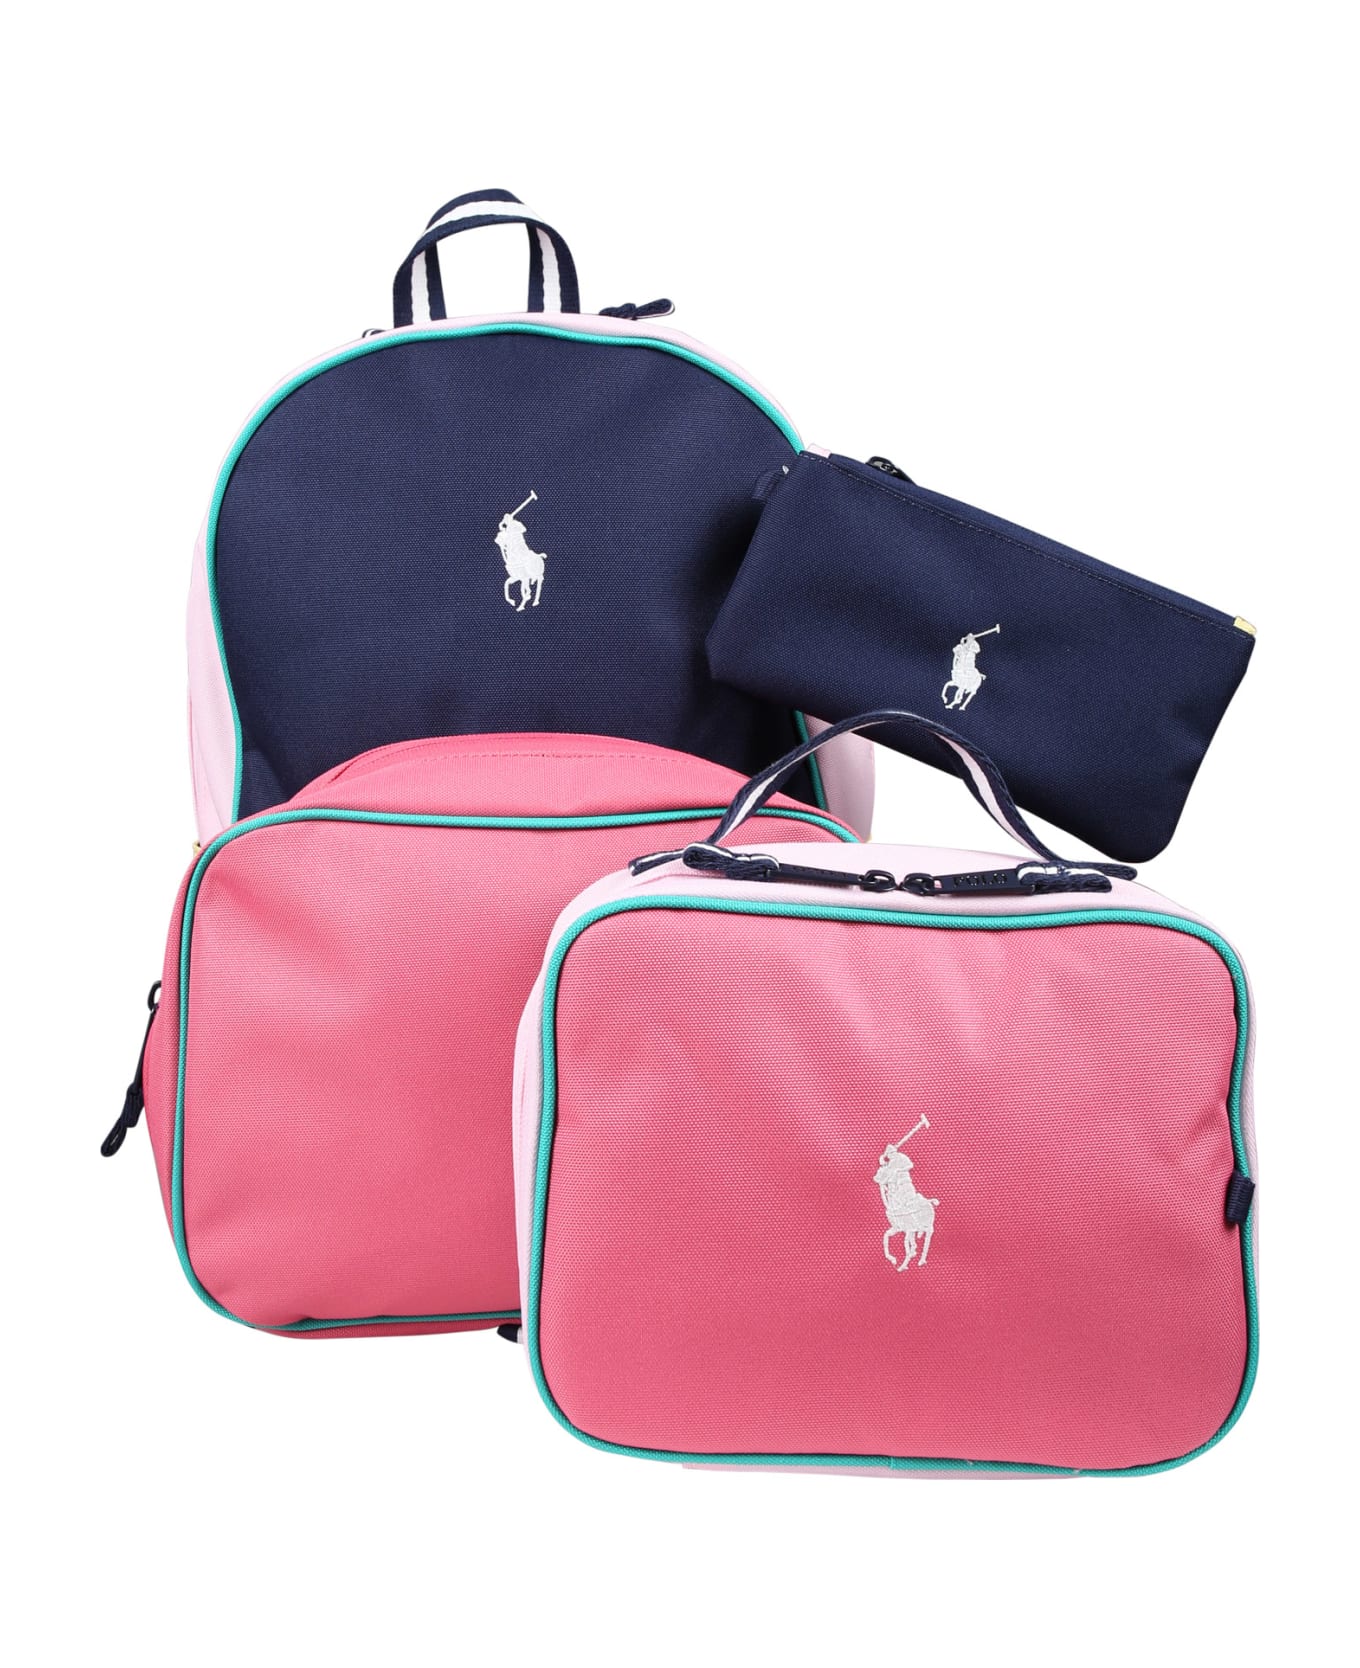 Ralph Lauren Multicolor Backpack For Girl - Multicolor